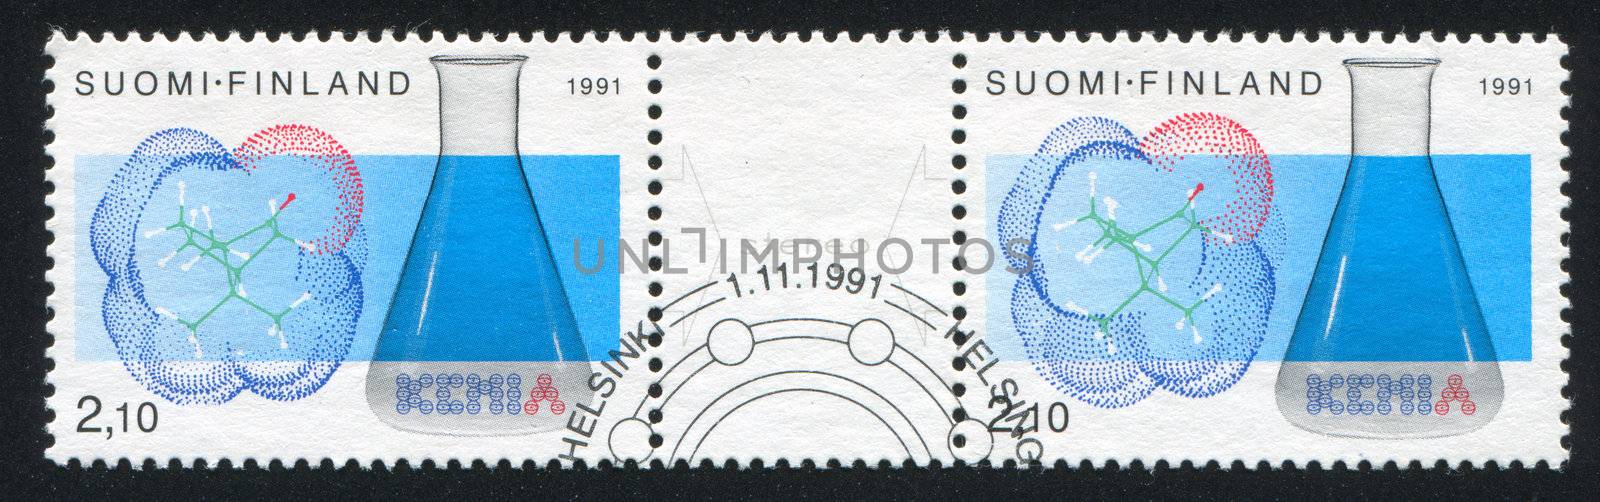 FINLAND - CIRCA 1991: stamp printed by Finland, shows Chemists Club, Finnish Chemists Society, circa 1991